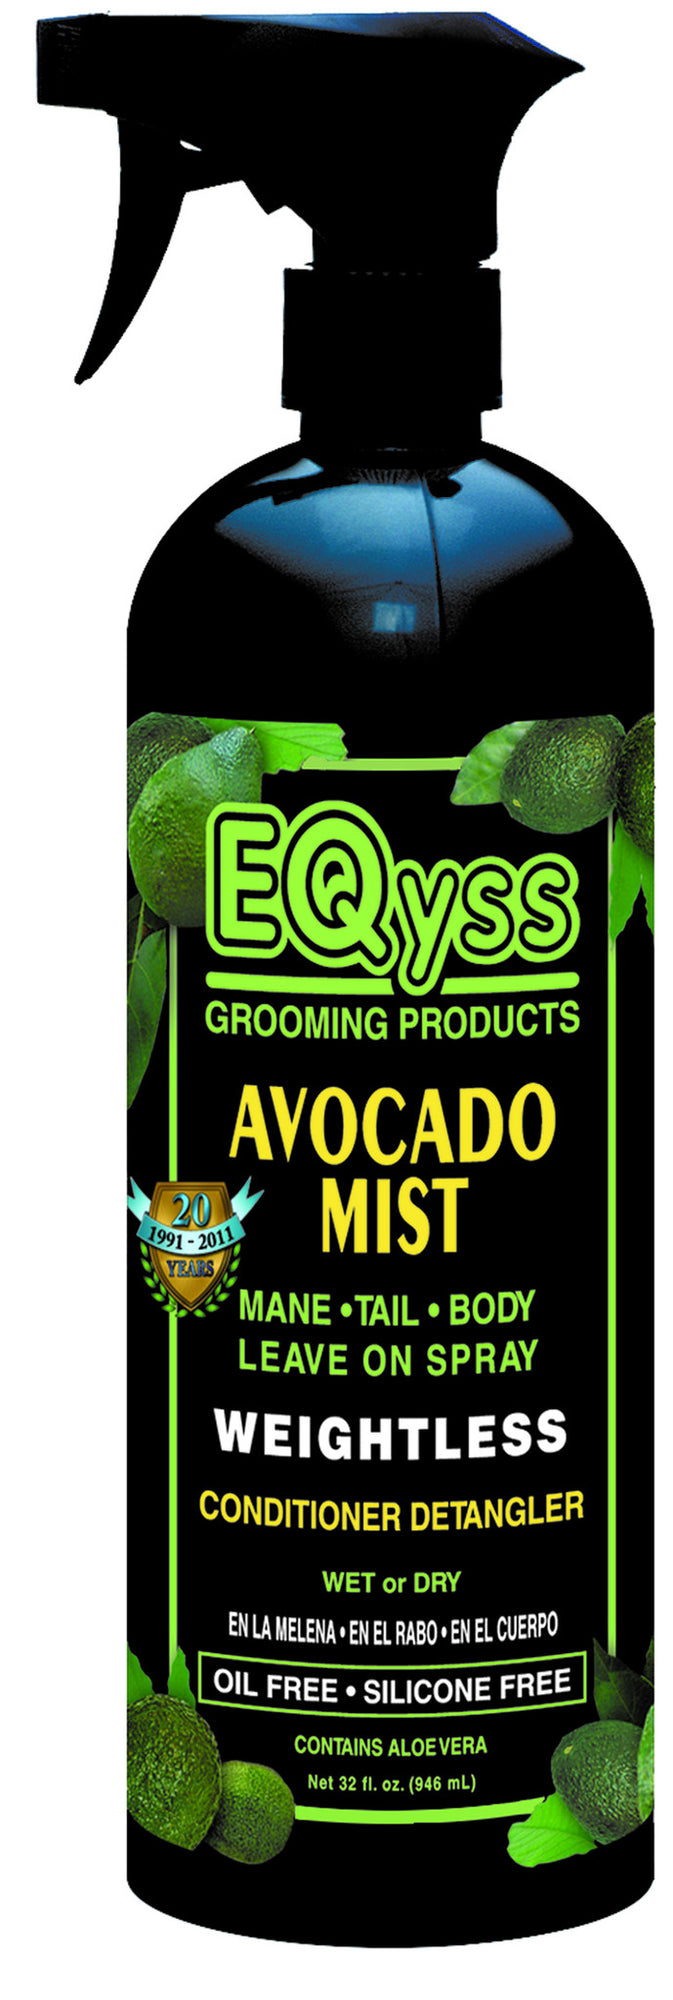 EQyss Avocado Mist Weightless Conditioner Detangler